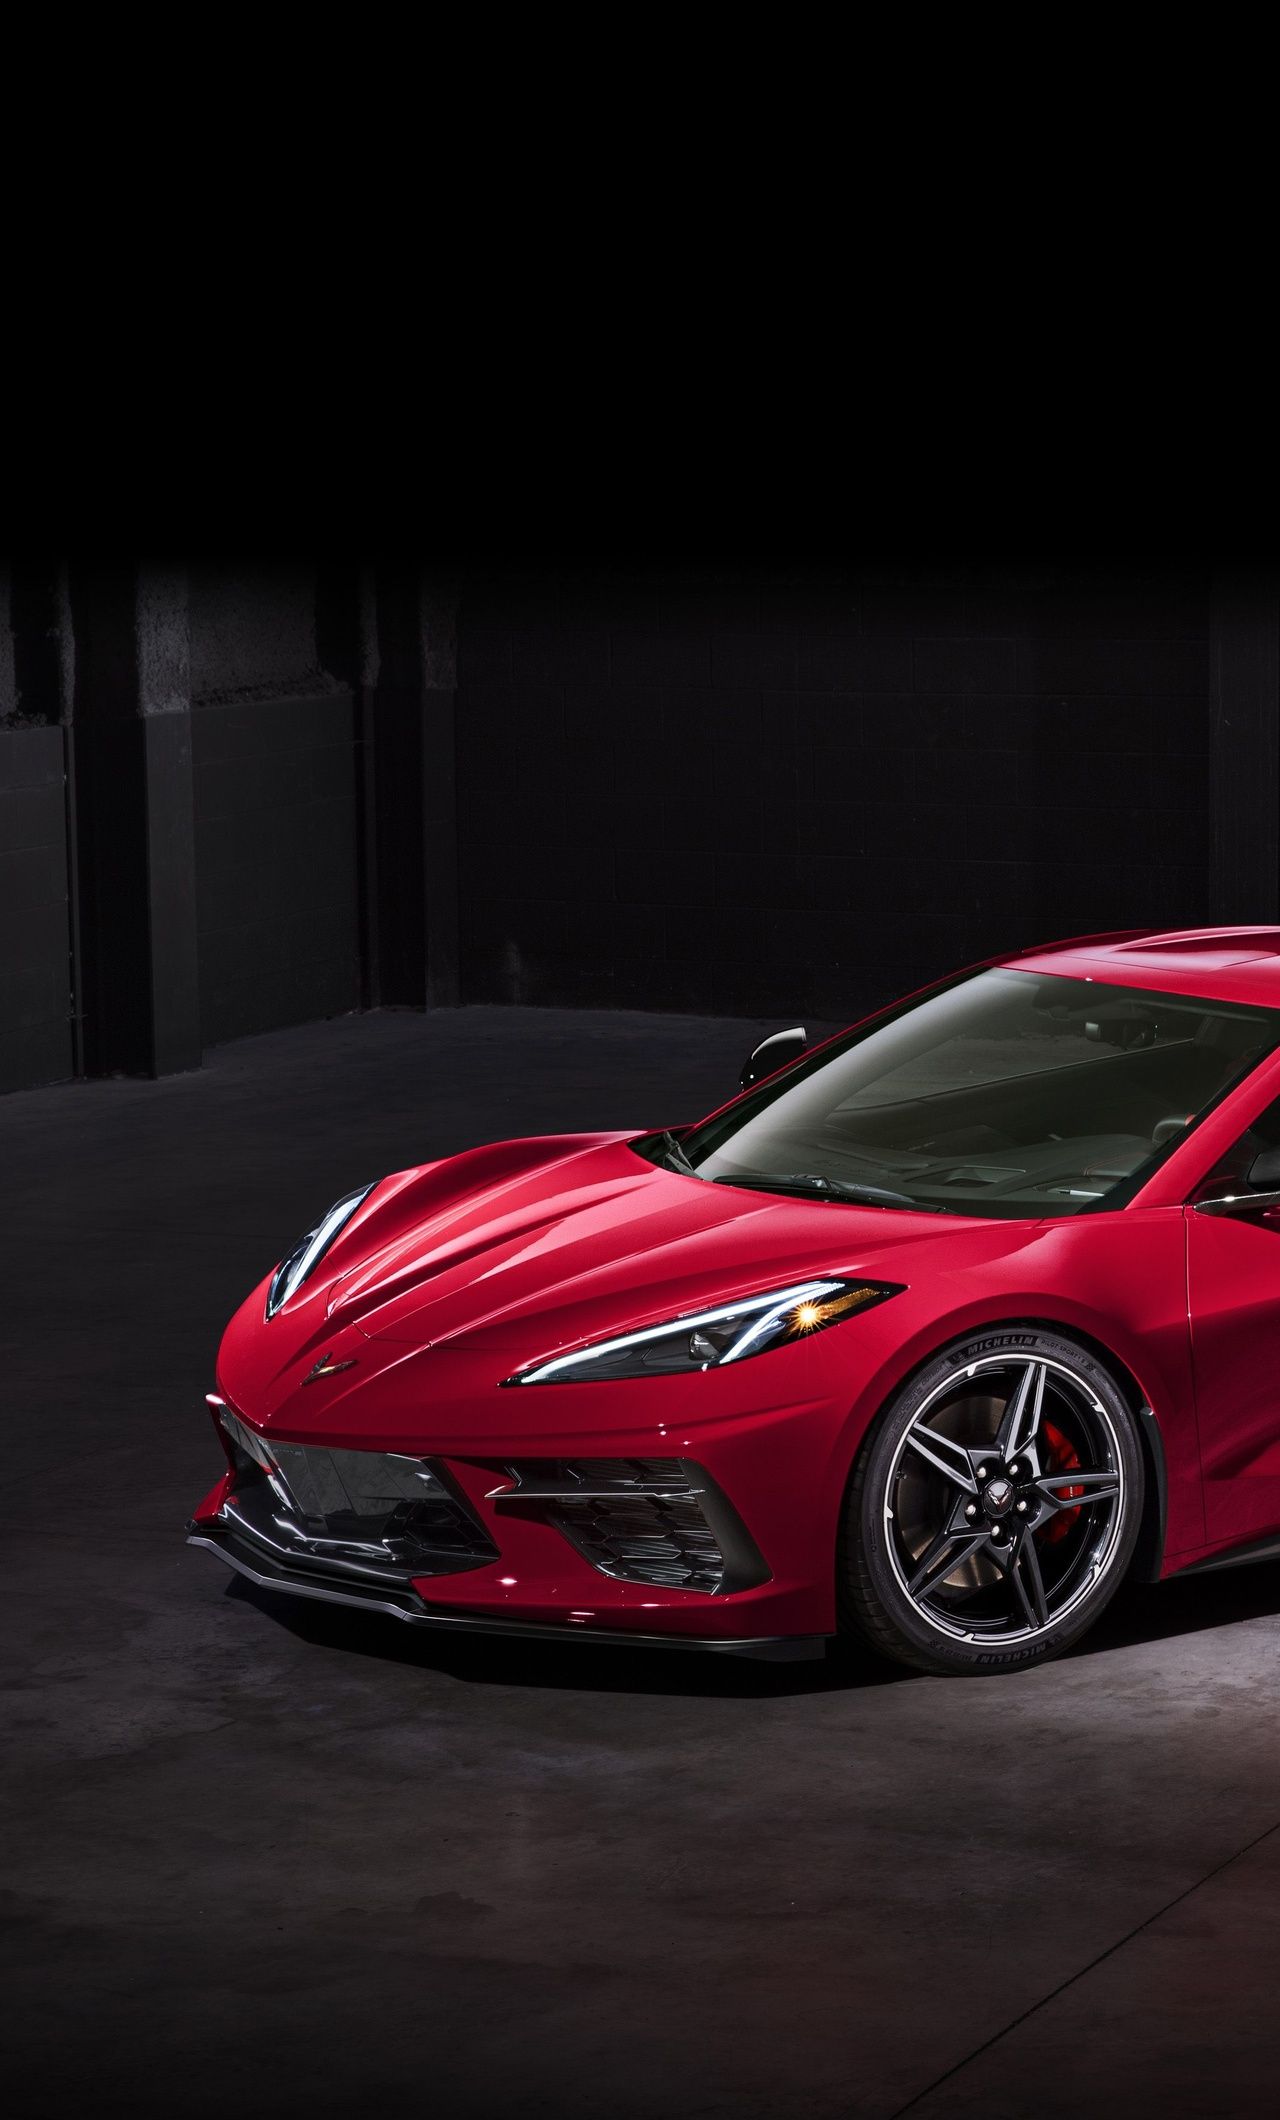 HD Wallpapers 2020: 2020 Corvette Iphone Wallpapers